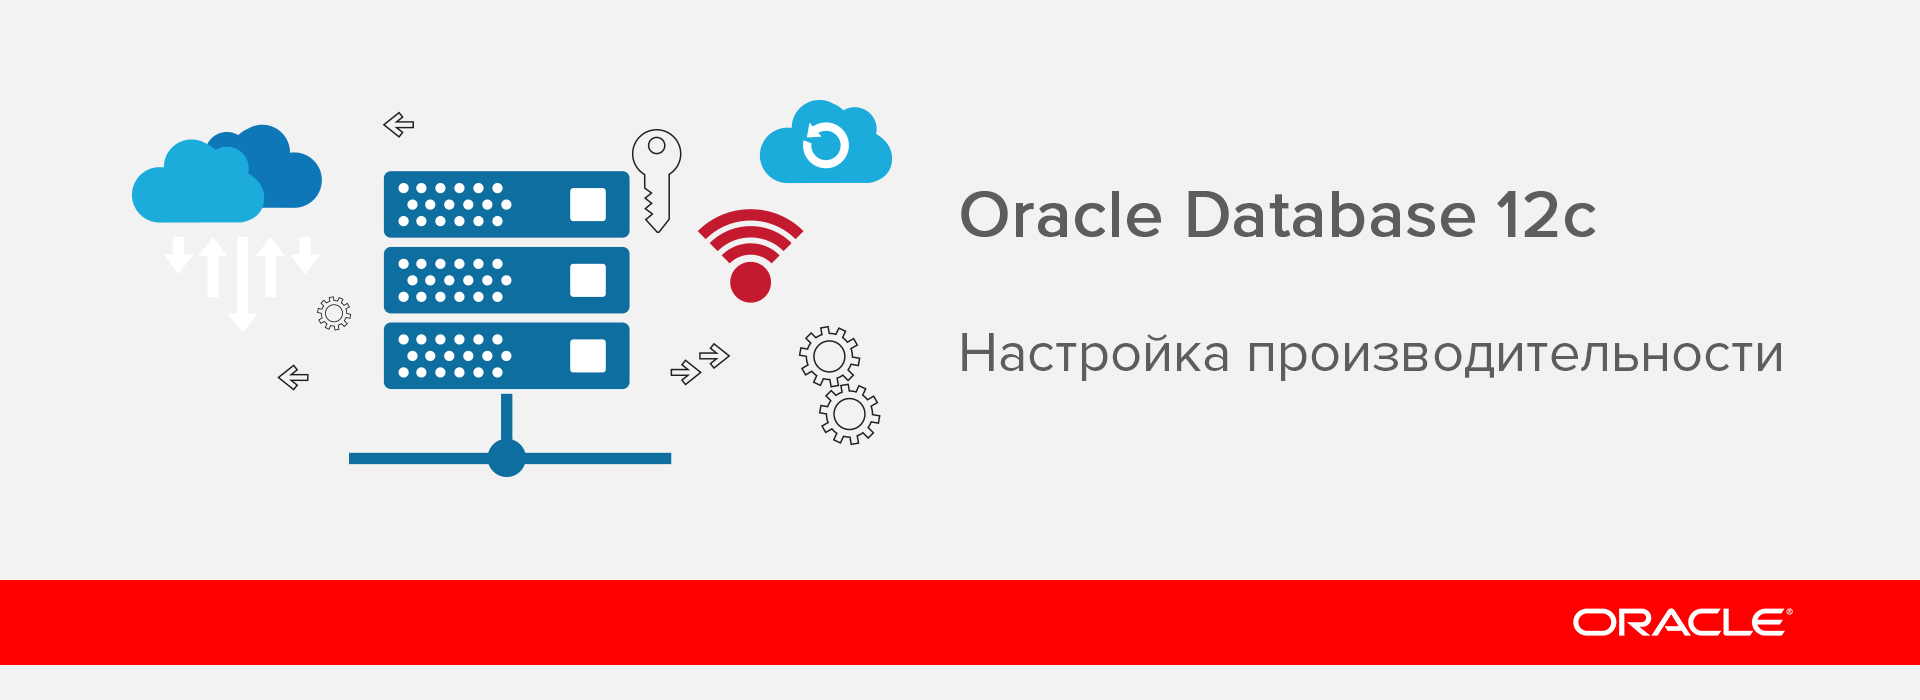 Oracle Database 12c: настройка производительности - 1